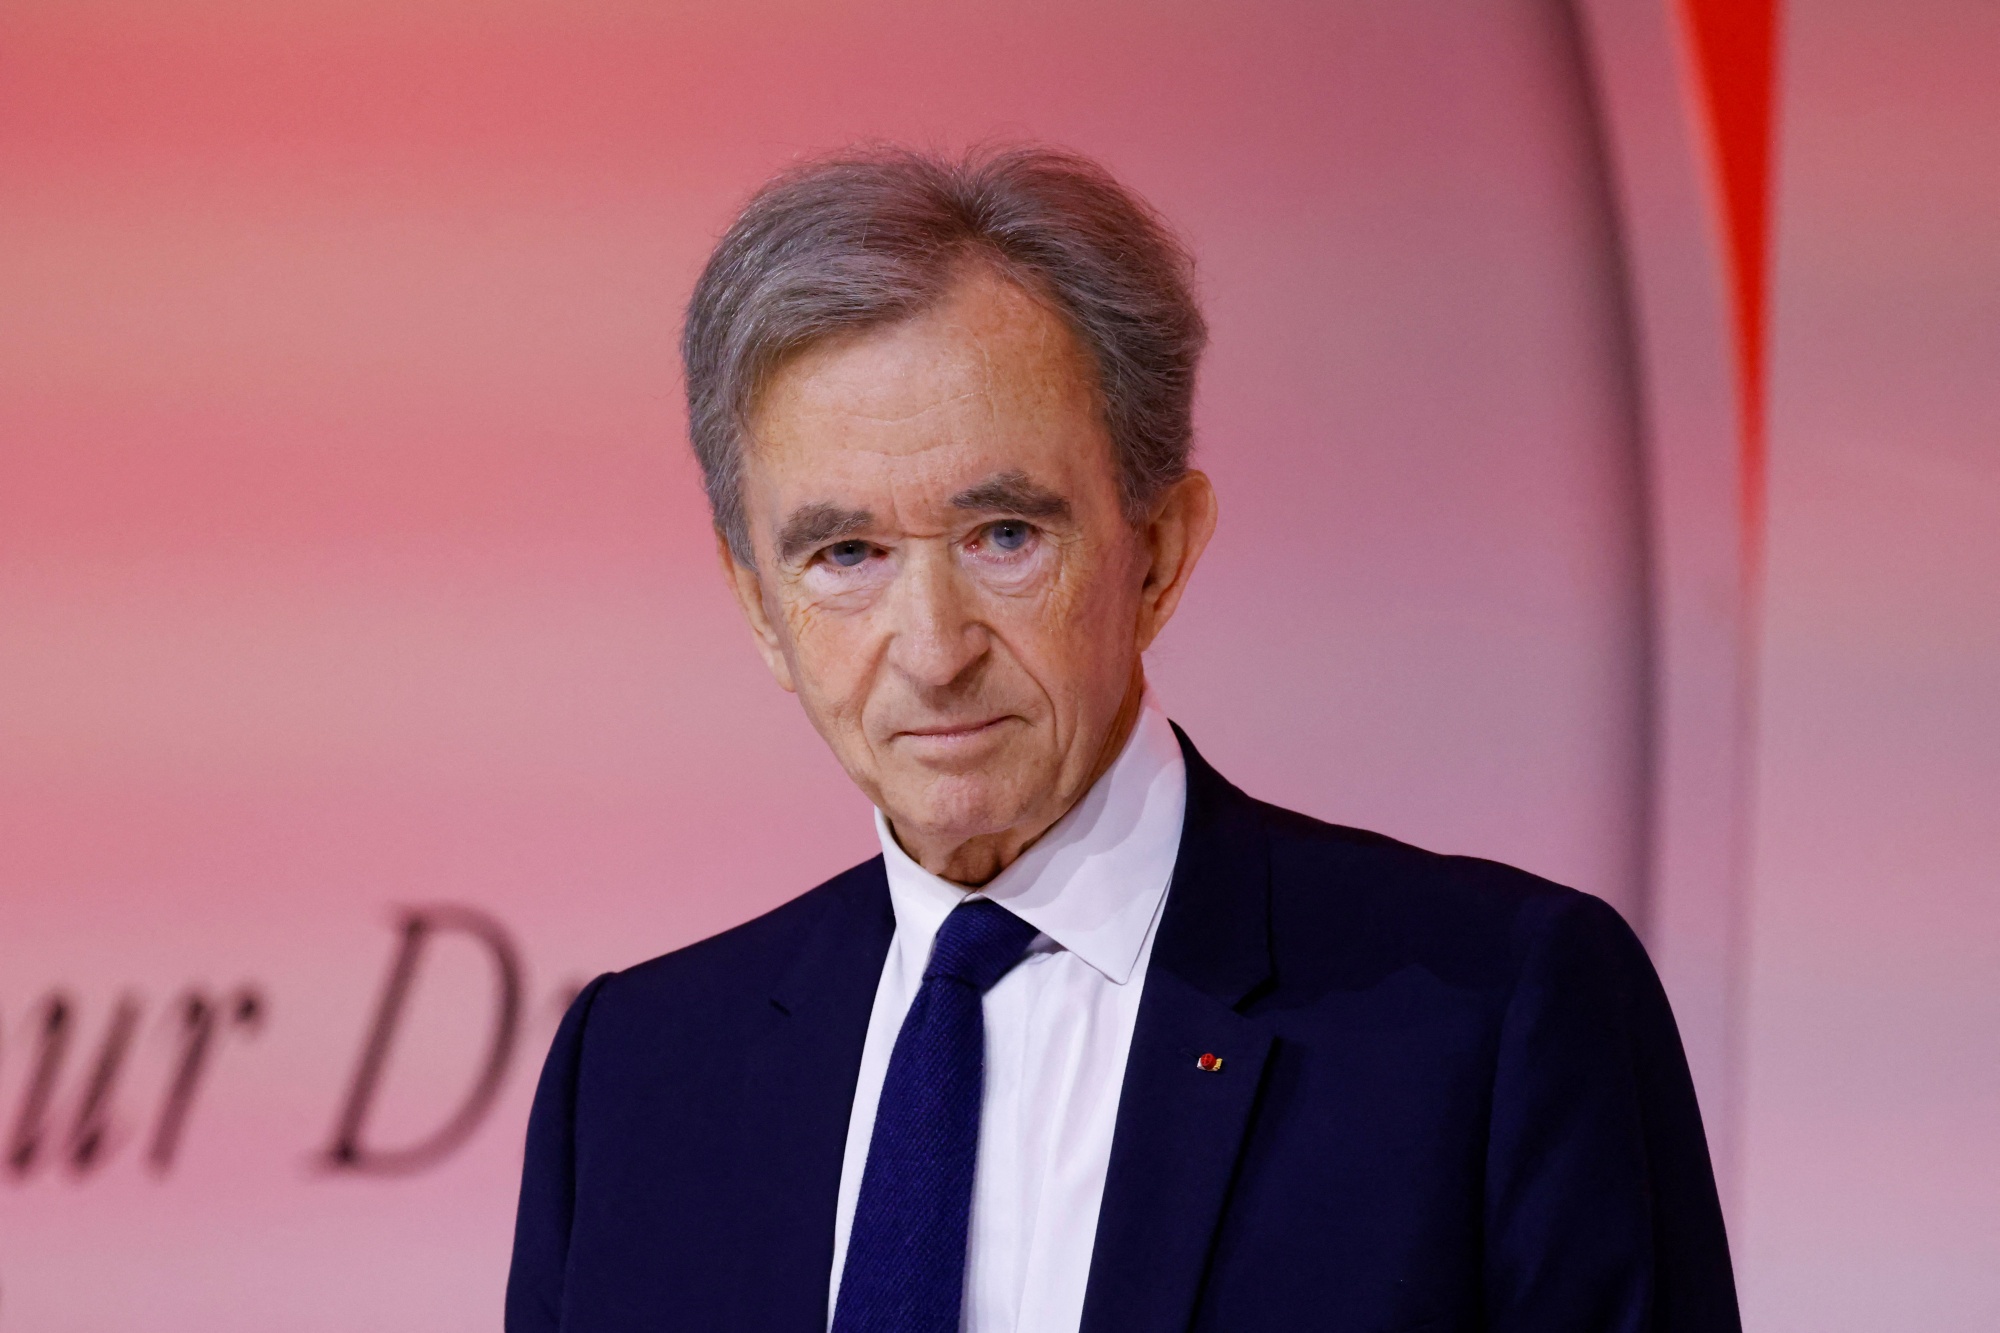 Video: Bernard Arnault Succession: Who Will Lead LVMH Next? - Bloomberg